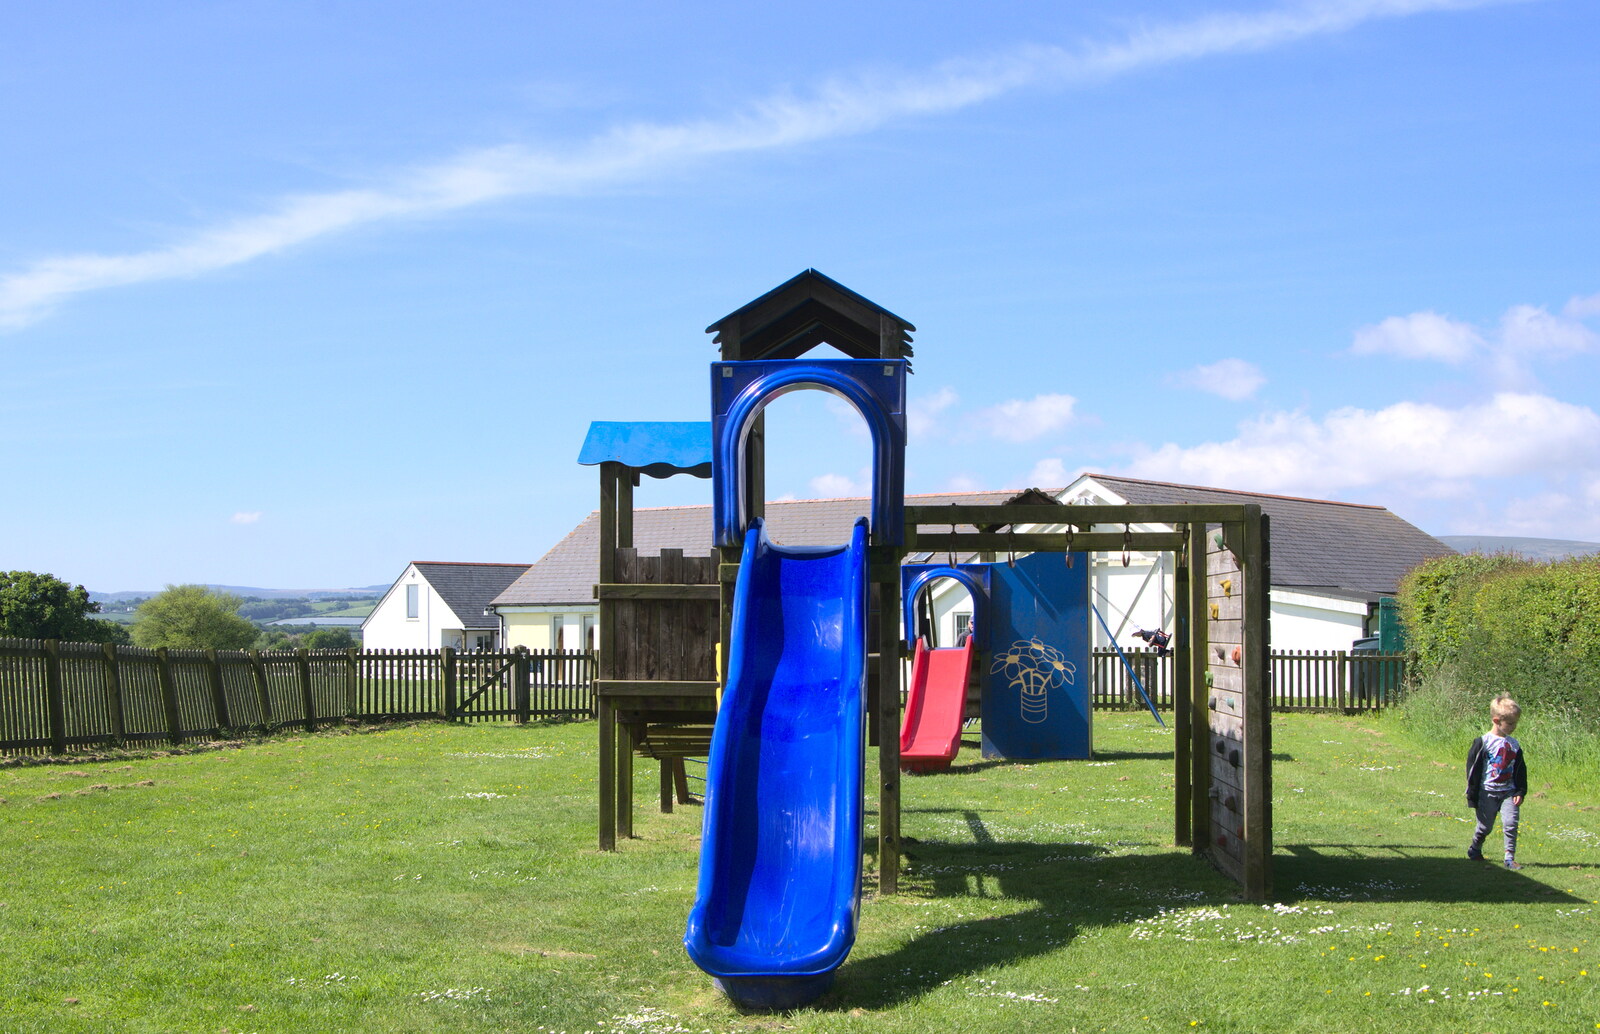 The playground from Spreyton to Stonehenge, Salisbury Plain, Wiltshire - 31st May 2016